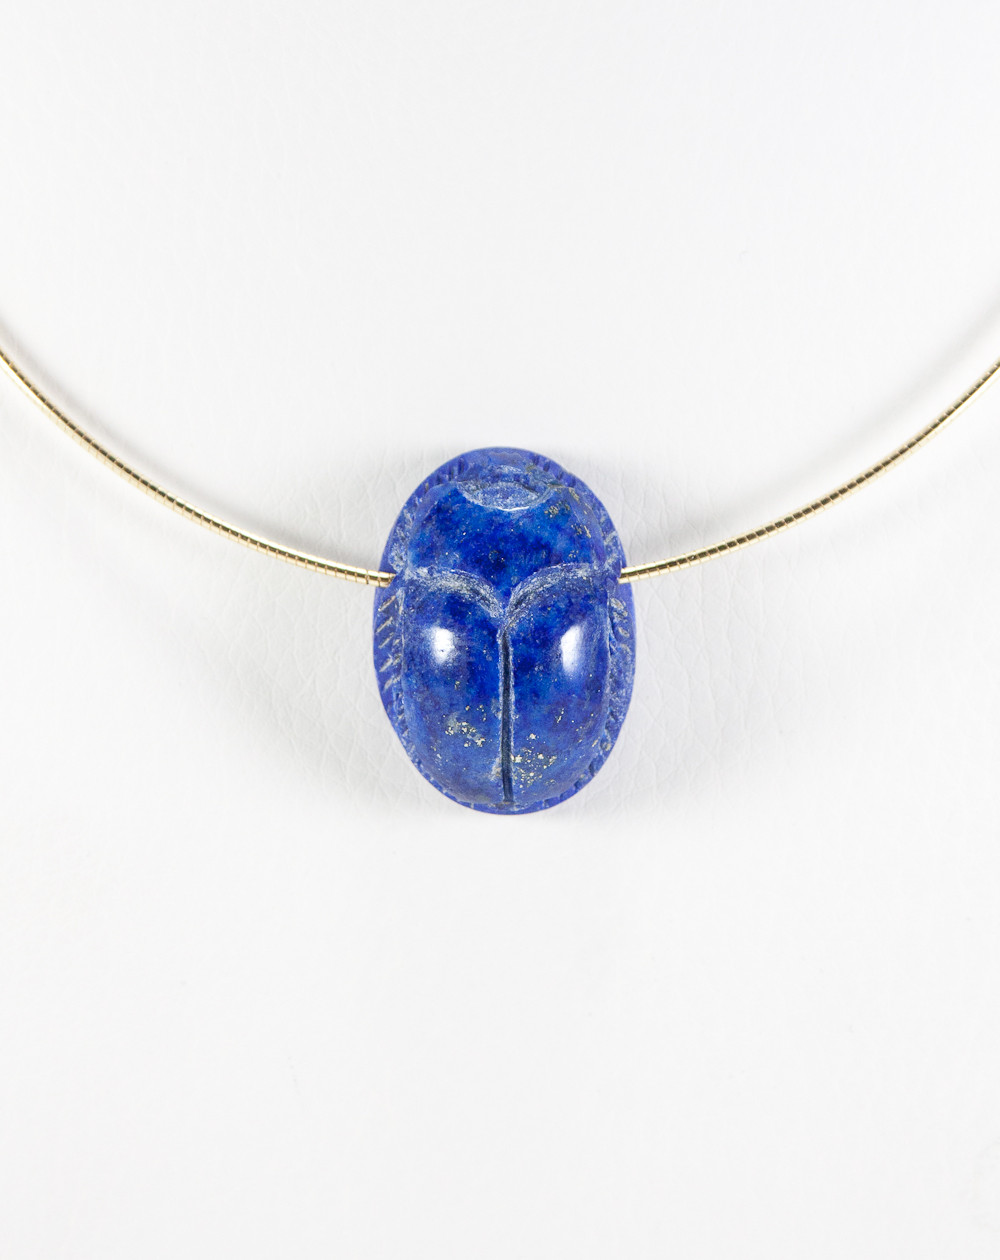 Pendentif Scarabée en Lapis Lazuli. Collection Khépri. Sanuk Création, Bayonne